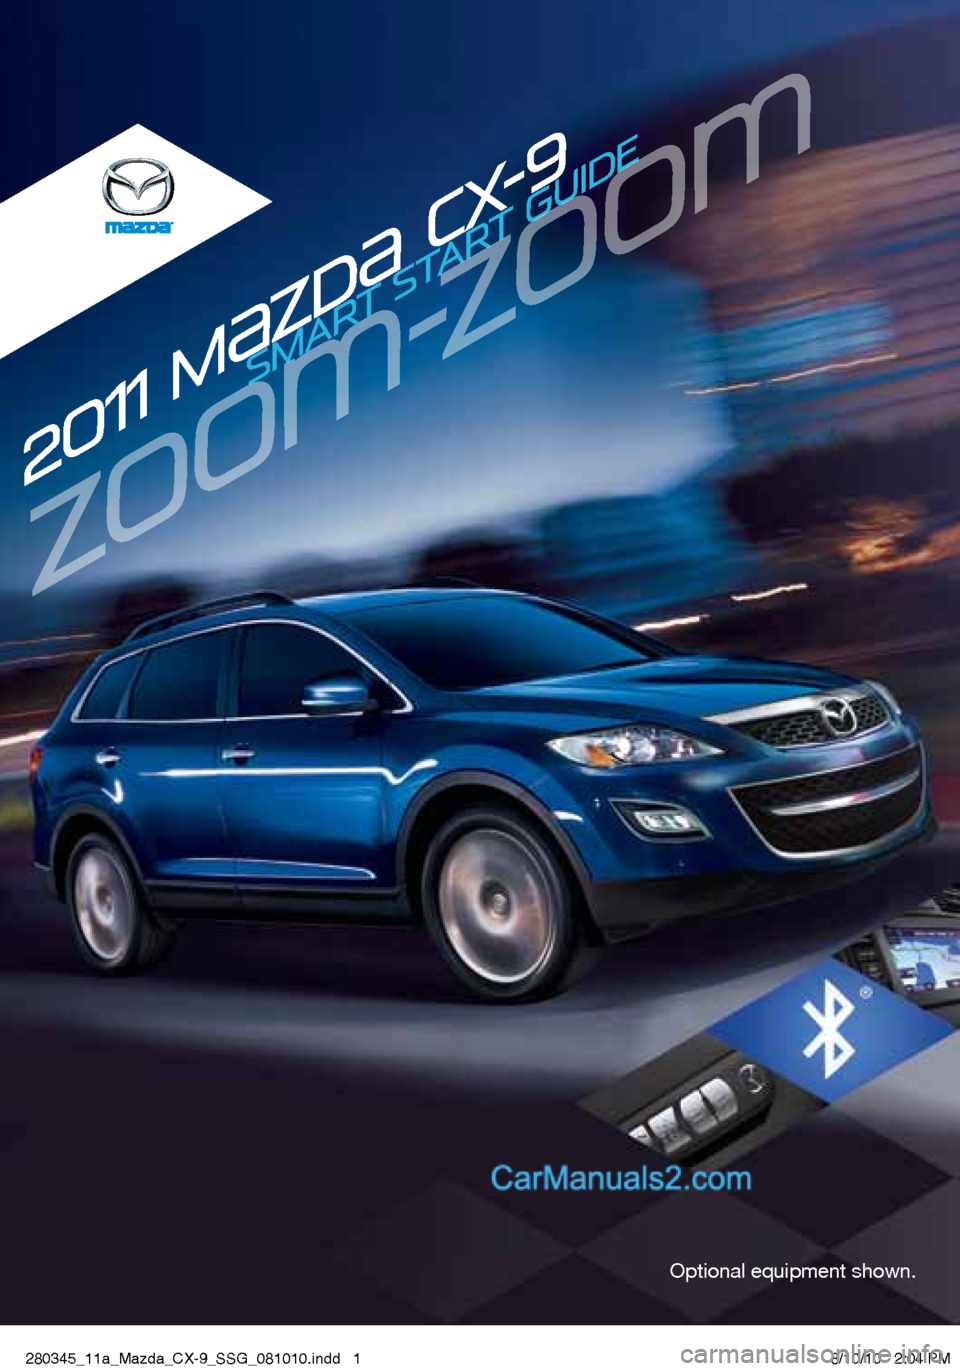 MAZDA MODEL CX-9 2011  Smart Start Guide (in English) 